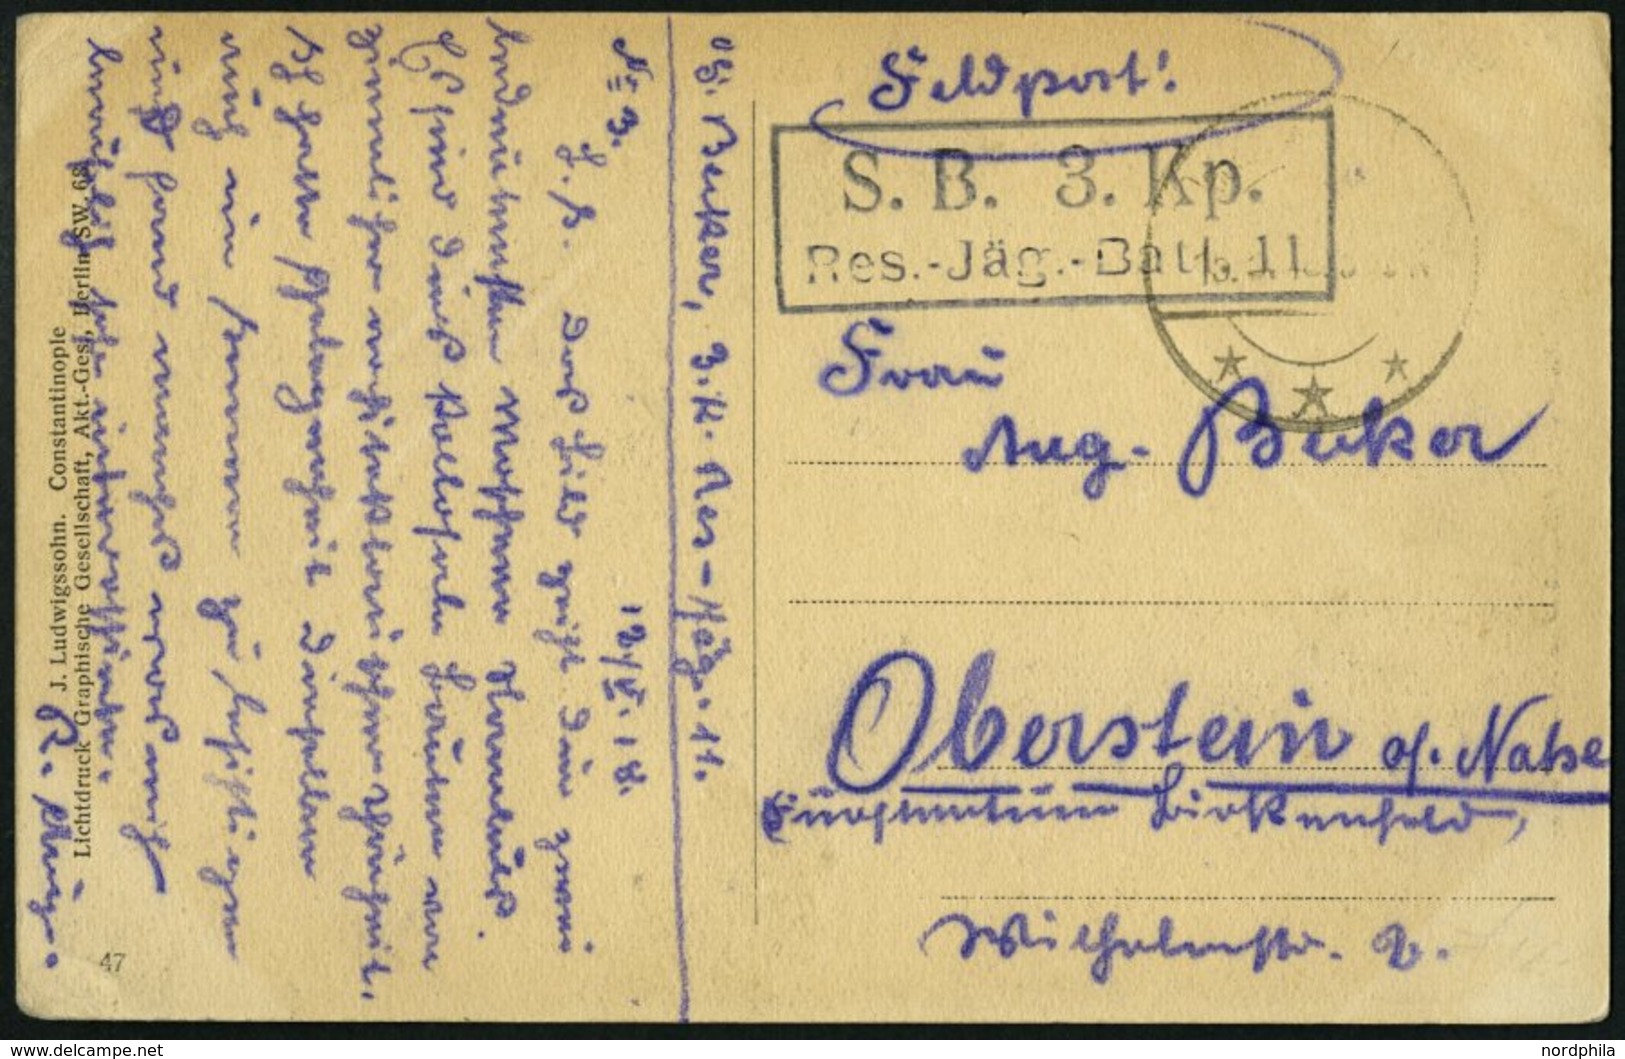 DP TÜRKEI 1918 Feldpoststation RAJAK Auf Feldpost-Ansichtskarte Der 3.Komp.Res.Jäg.Batt 11, Pracht - Turchia (uffici)